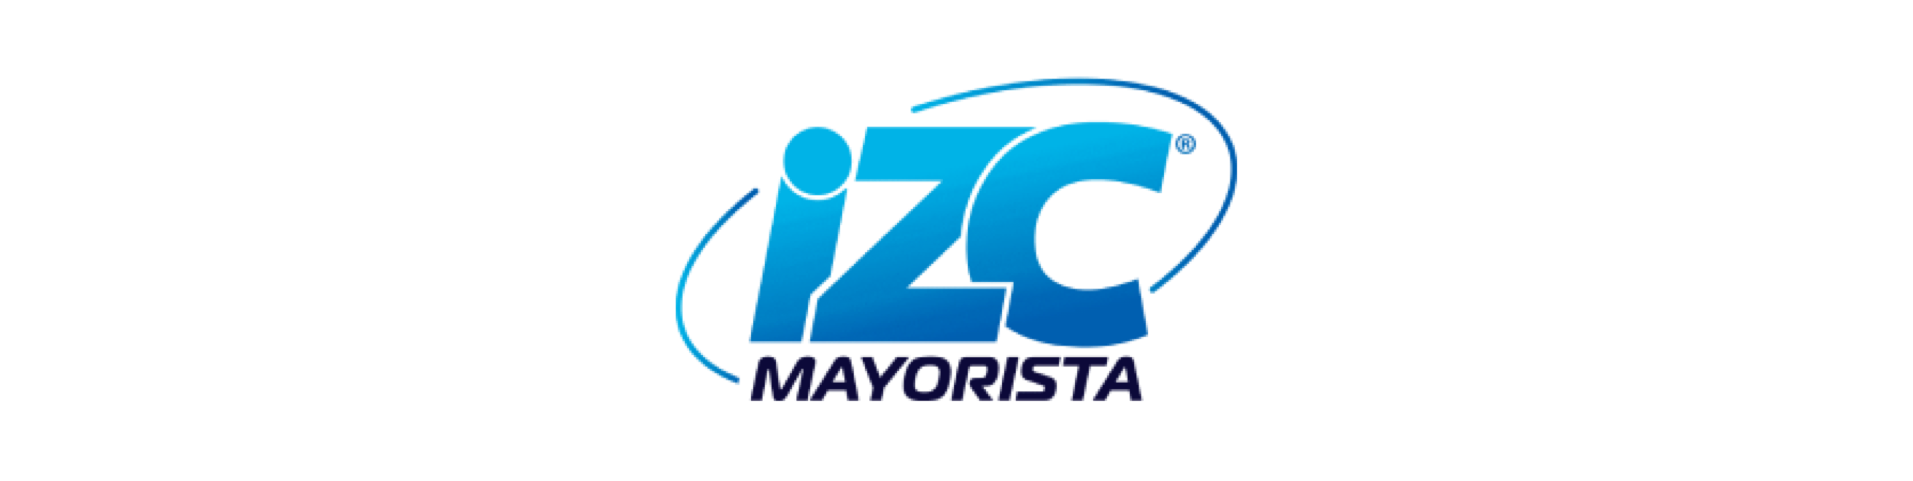 izc logo